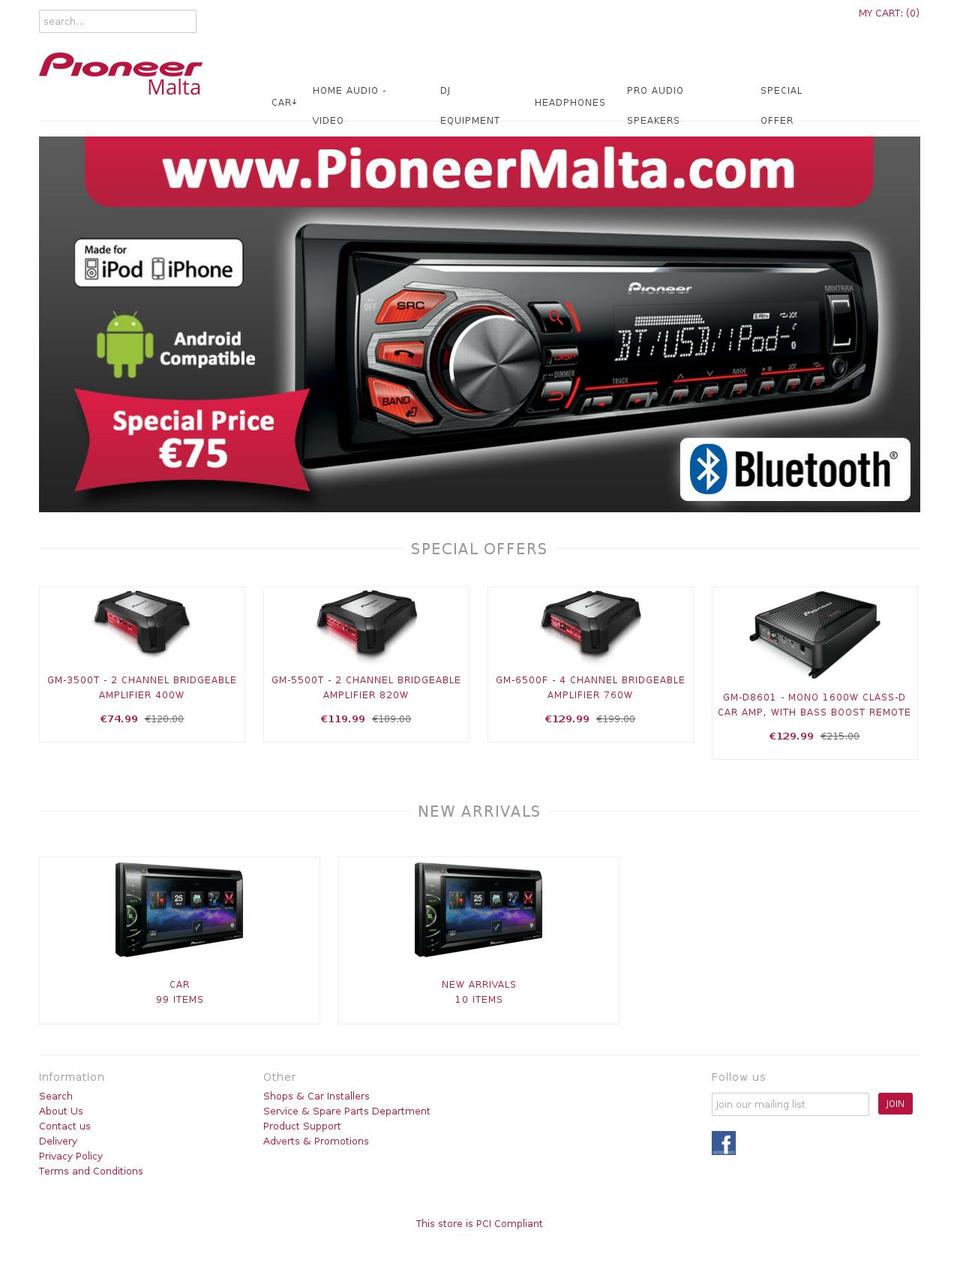 pioneermalta.com shopify website screenshot